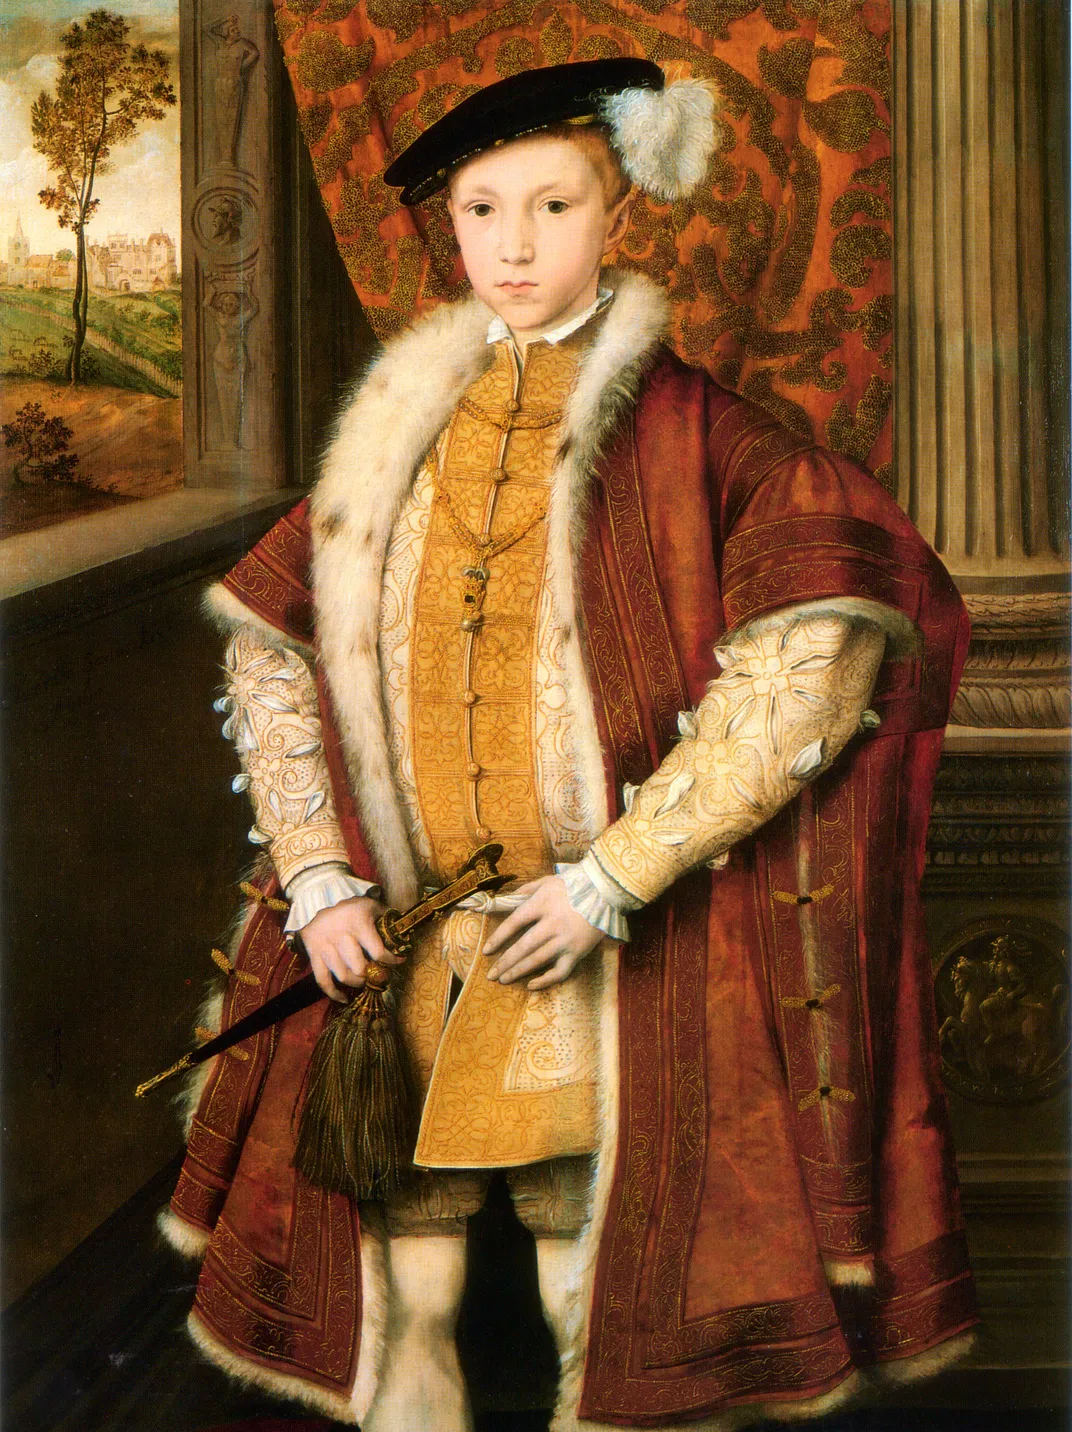 Portrait of a young Edward VI